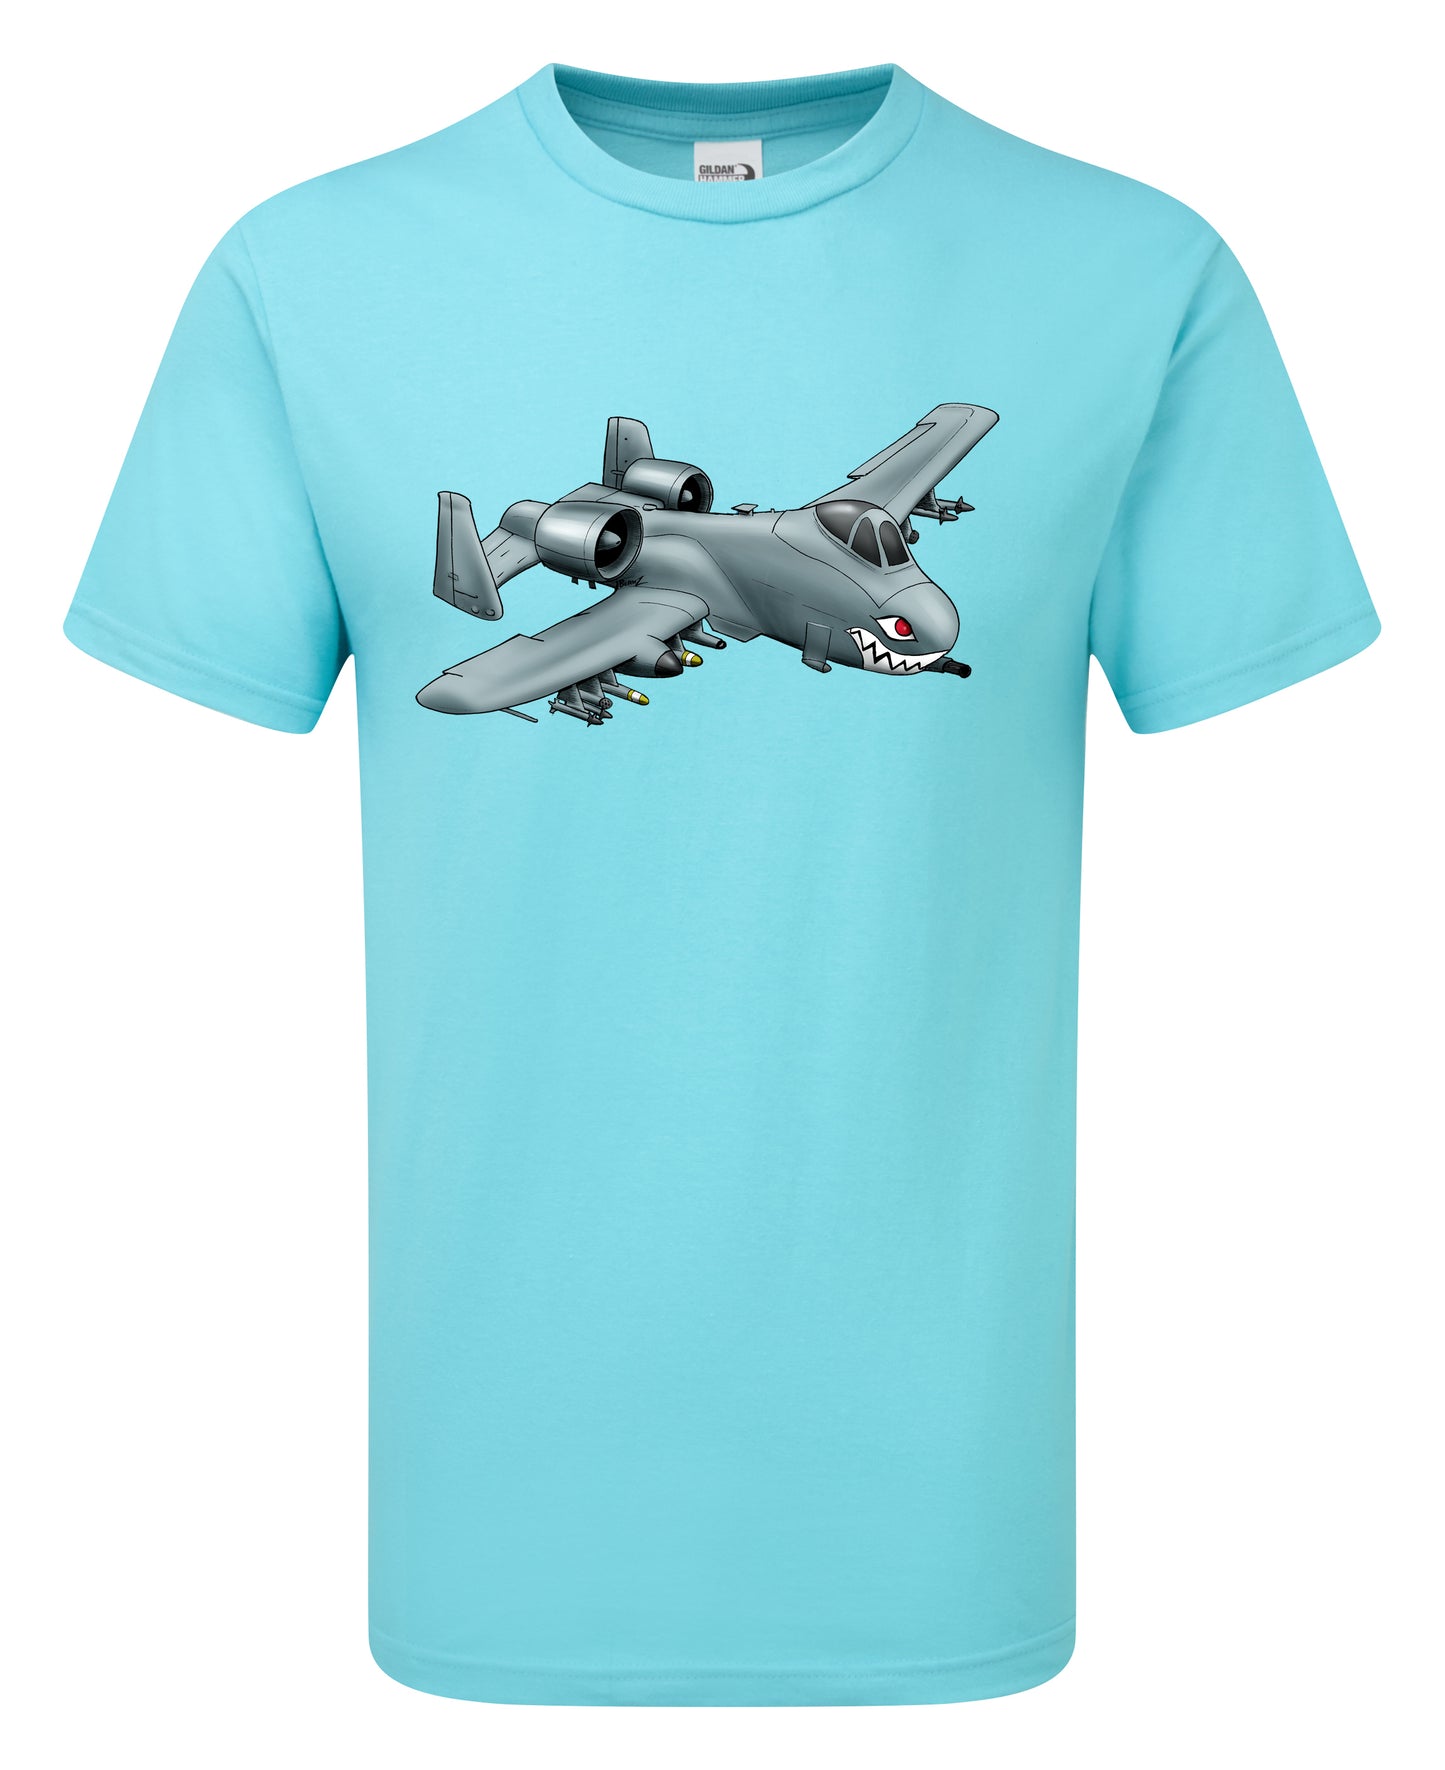 A10 Warthog Cartoon T-Shirt